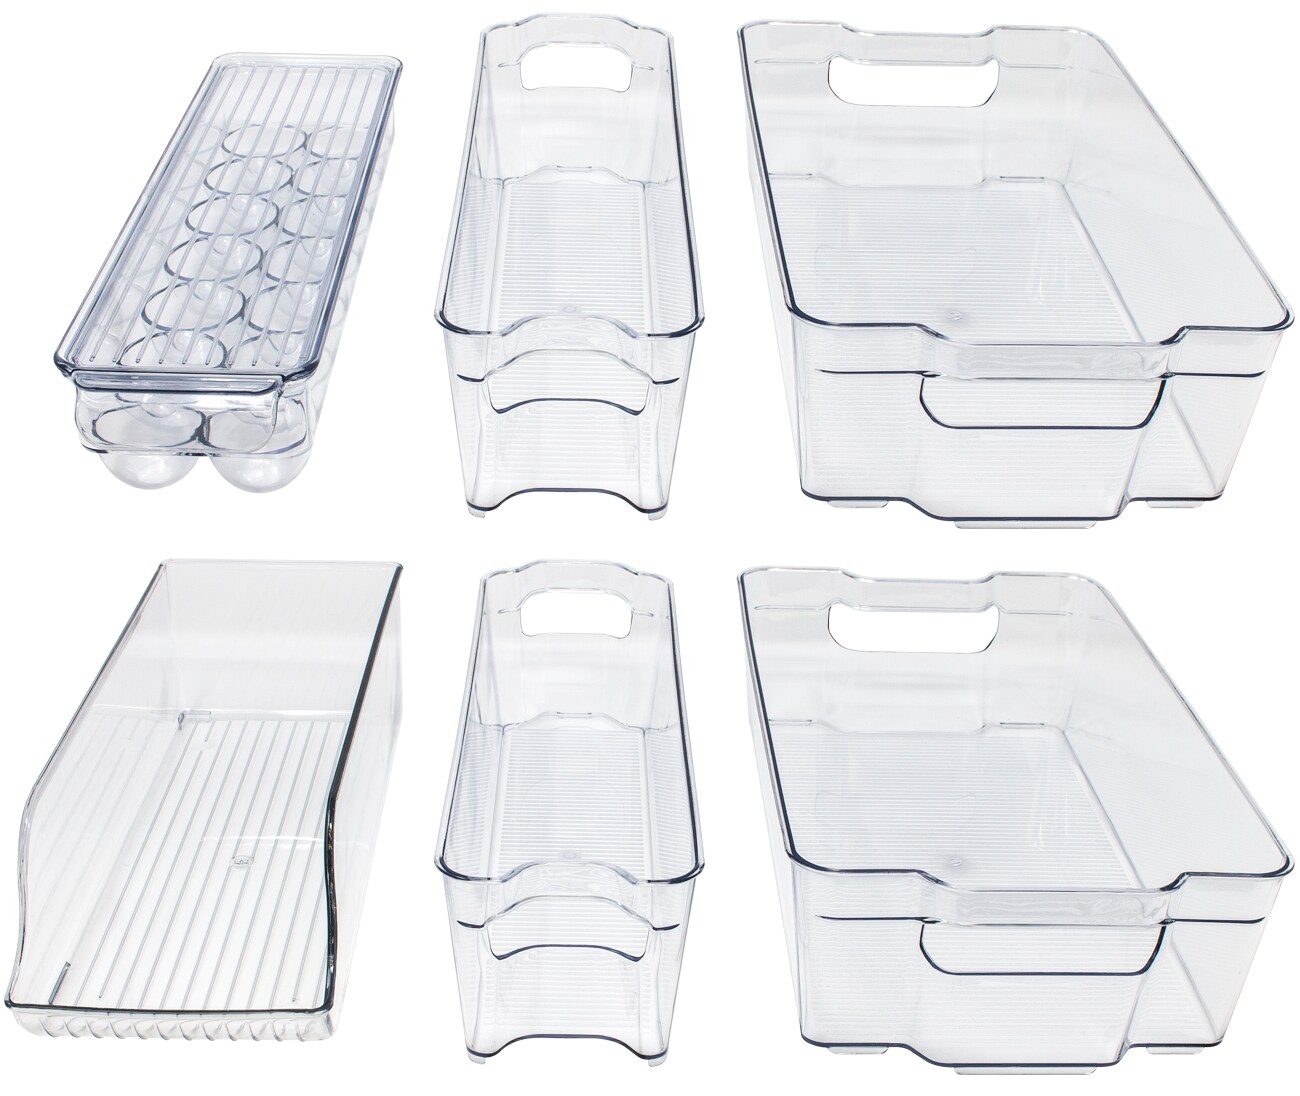 Sorbus Plastic Storage Bins (4 Pack) Small